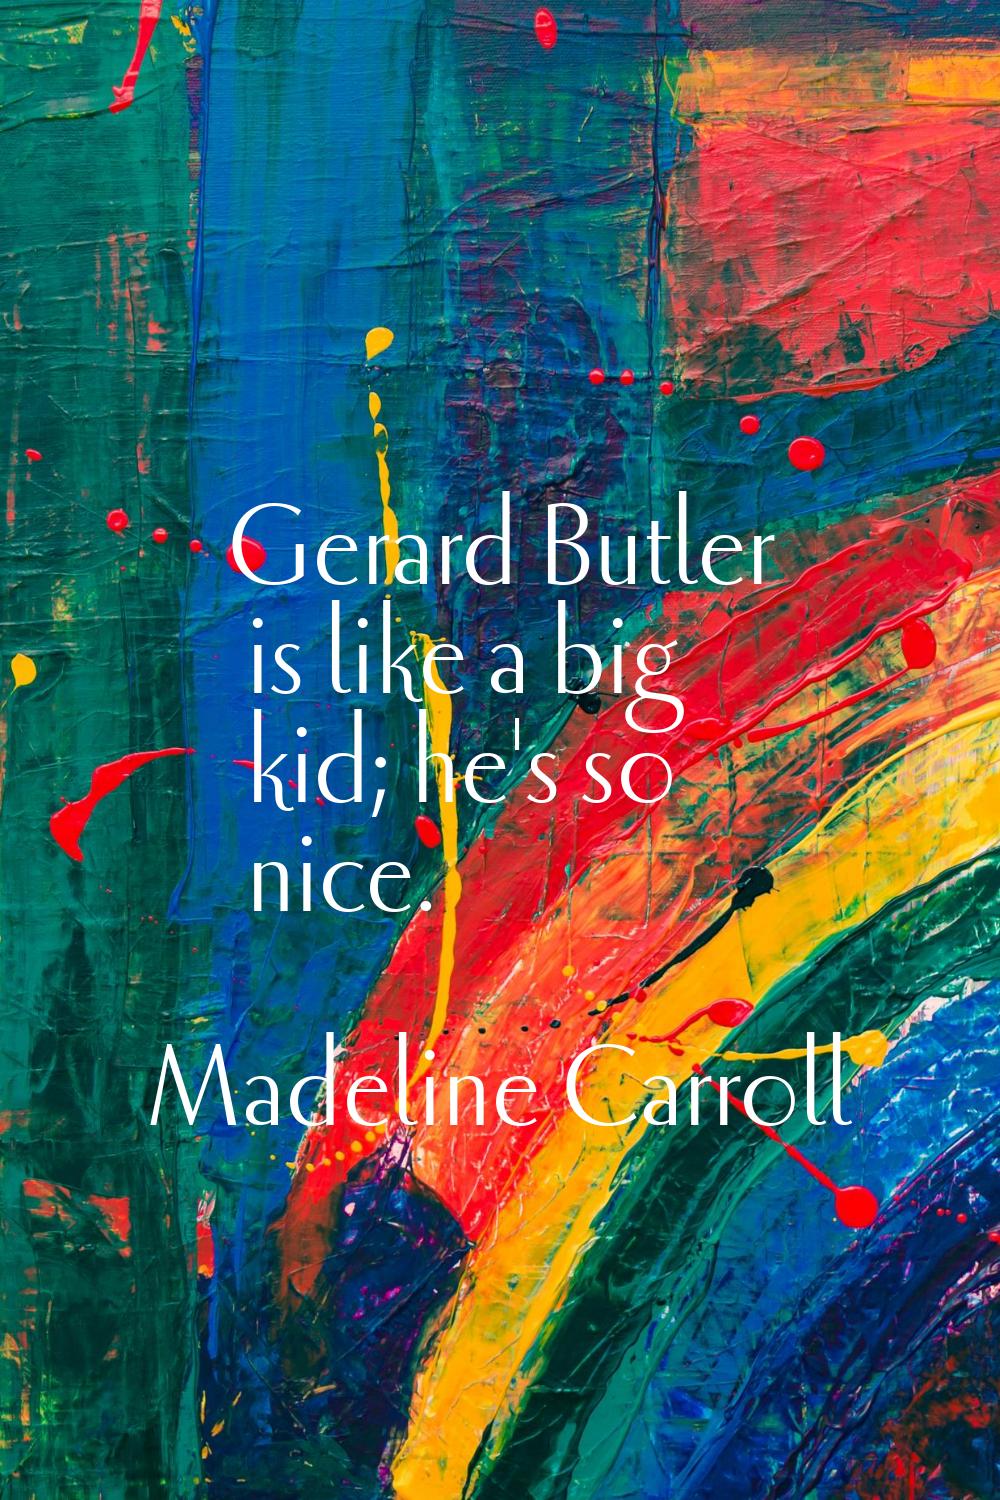 Gerard Butler is like a big kid; he's so nice.